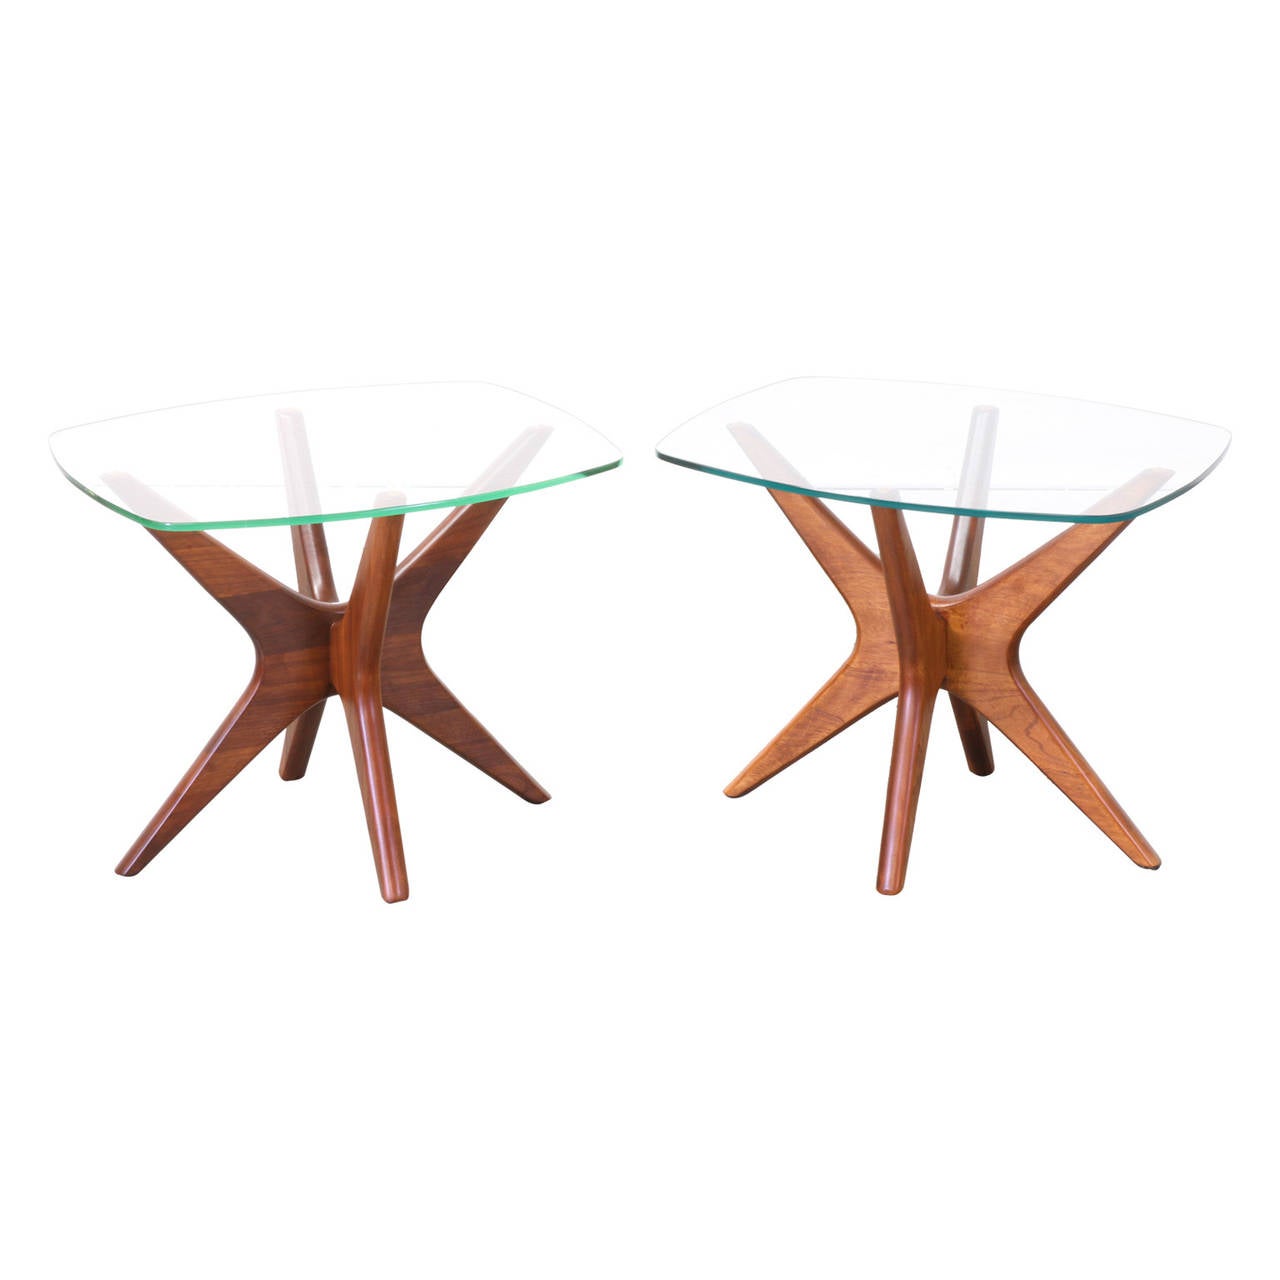 Mid-Century Modern Adrian Pearsall “Jax” Side Tables for Craft Associates